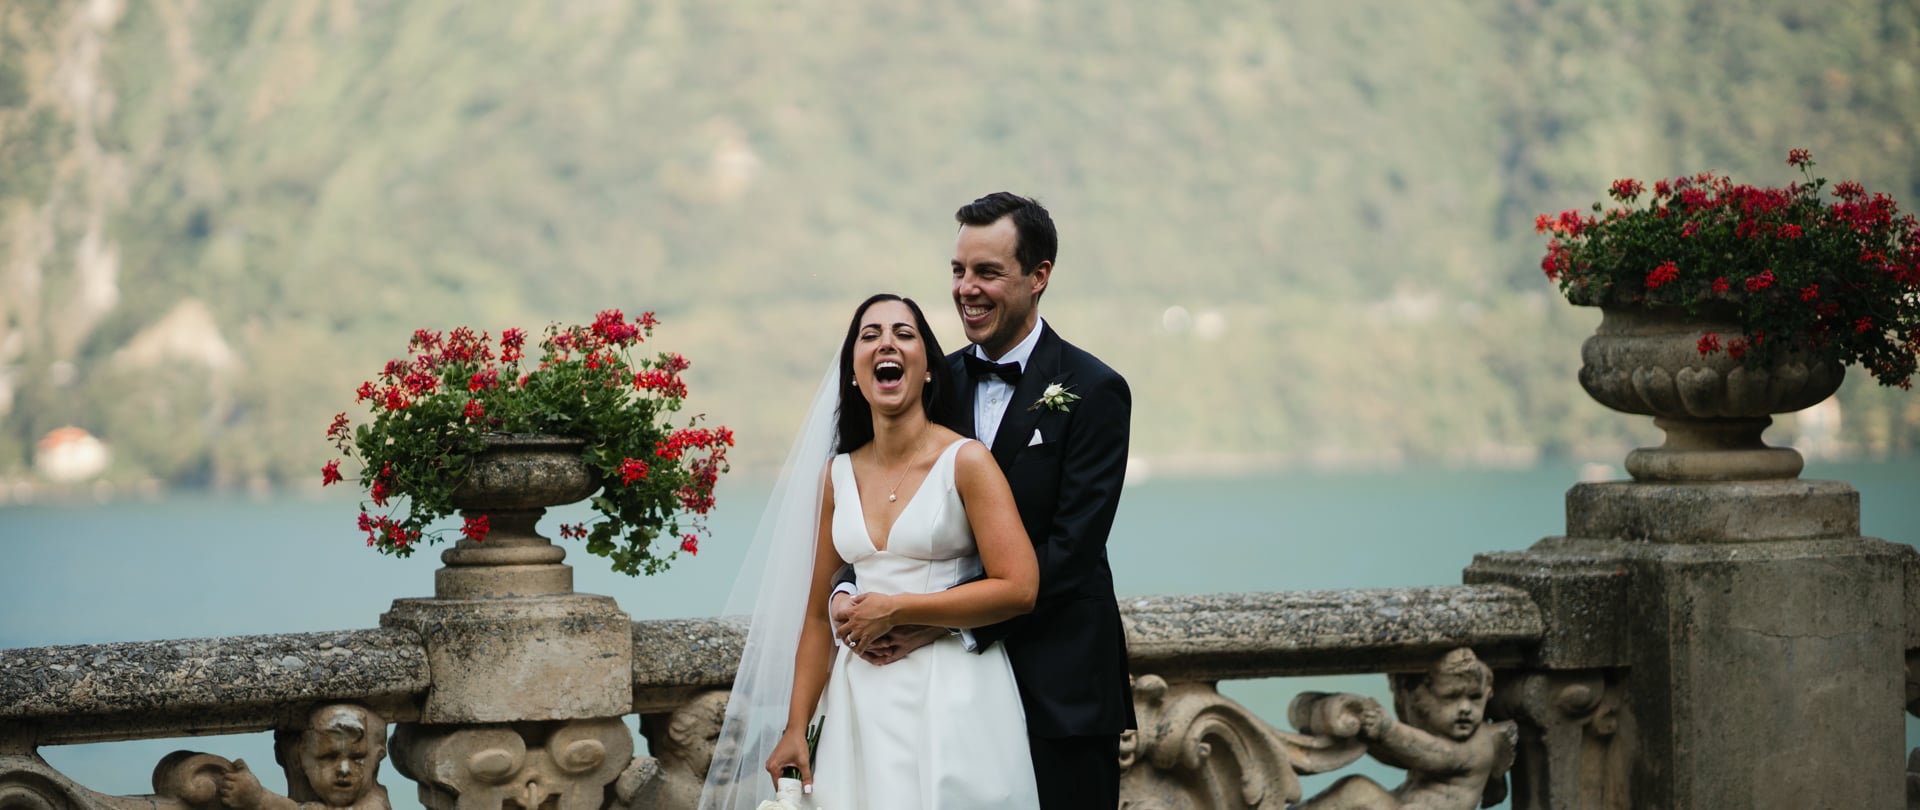 Shirin & Tom Wedding Video Filmed atLake Como,Italy